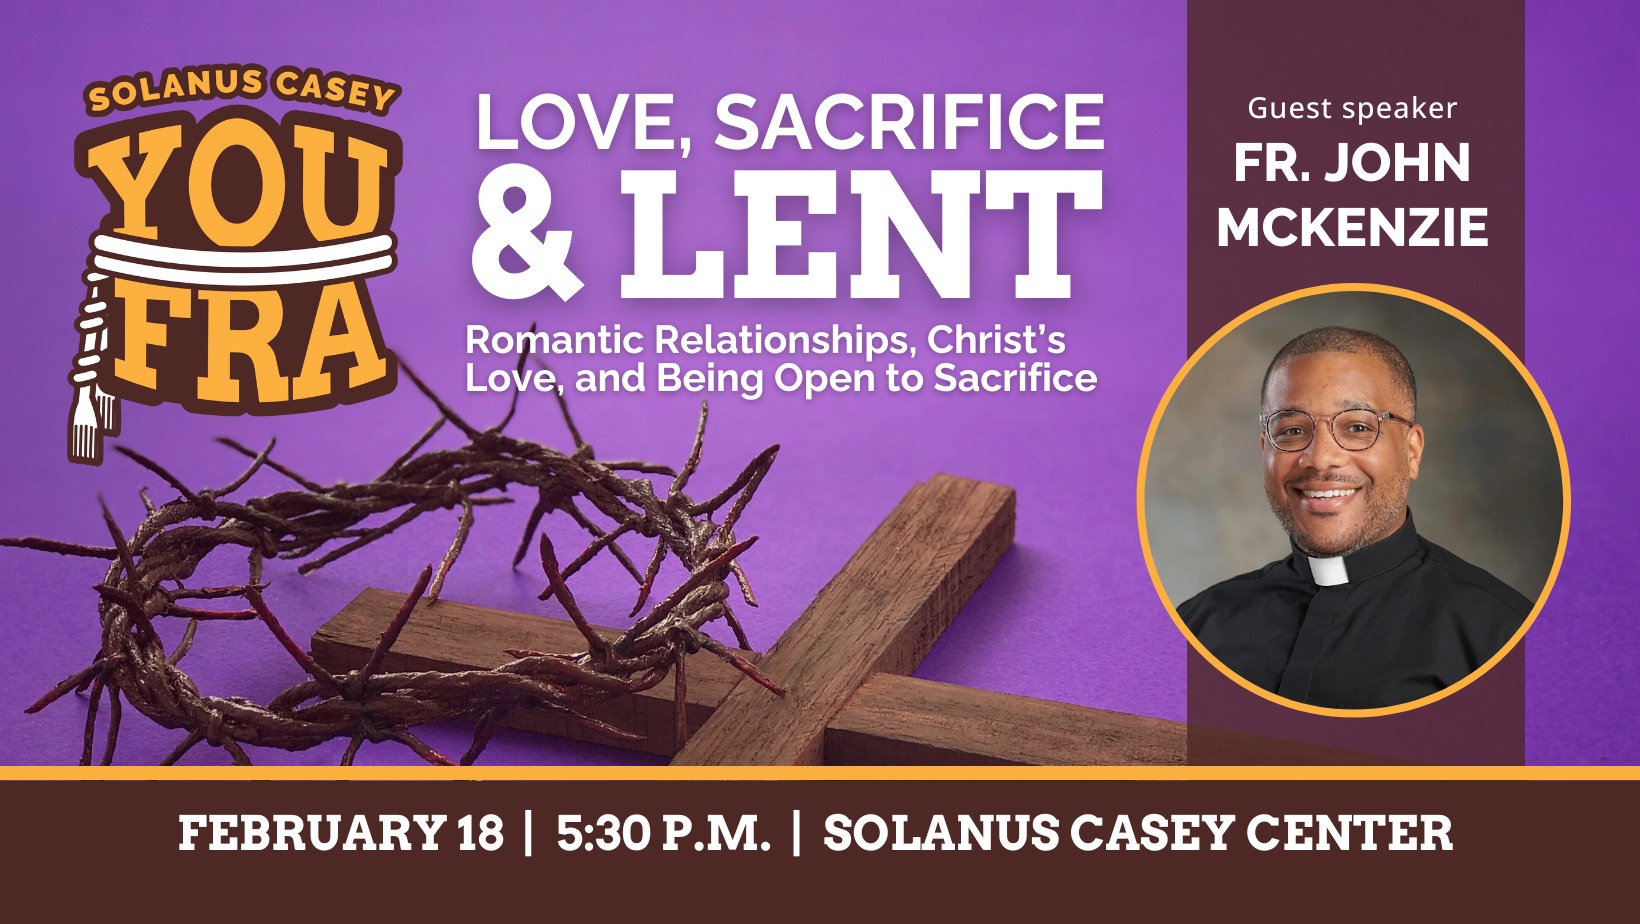 Solanus Casey YouFra: Love, Sacrifice and Lent